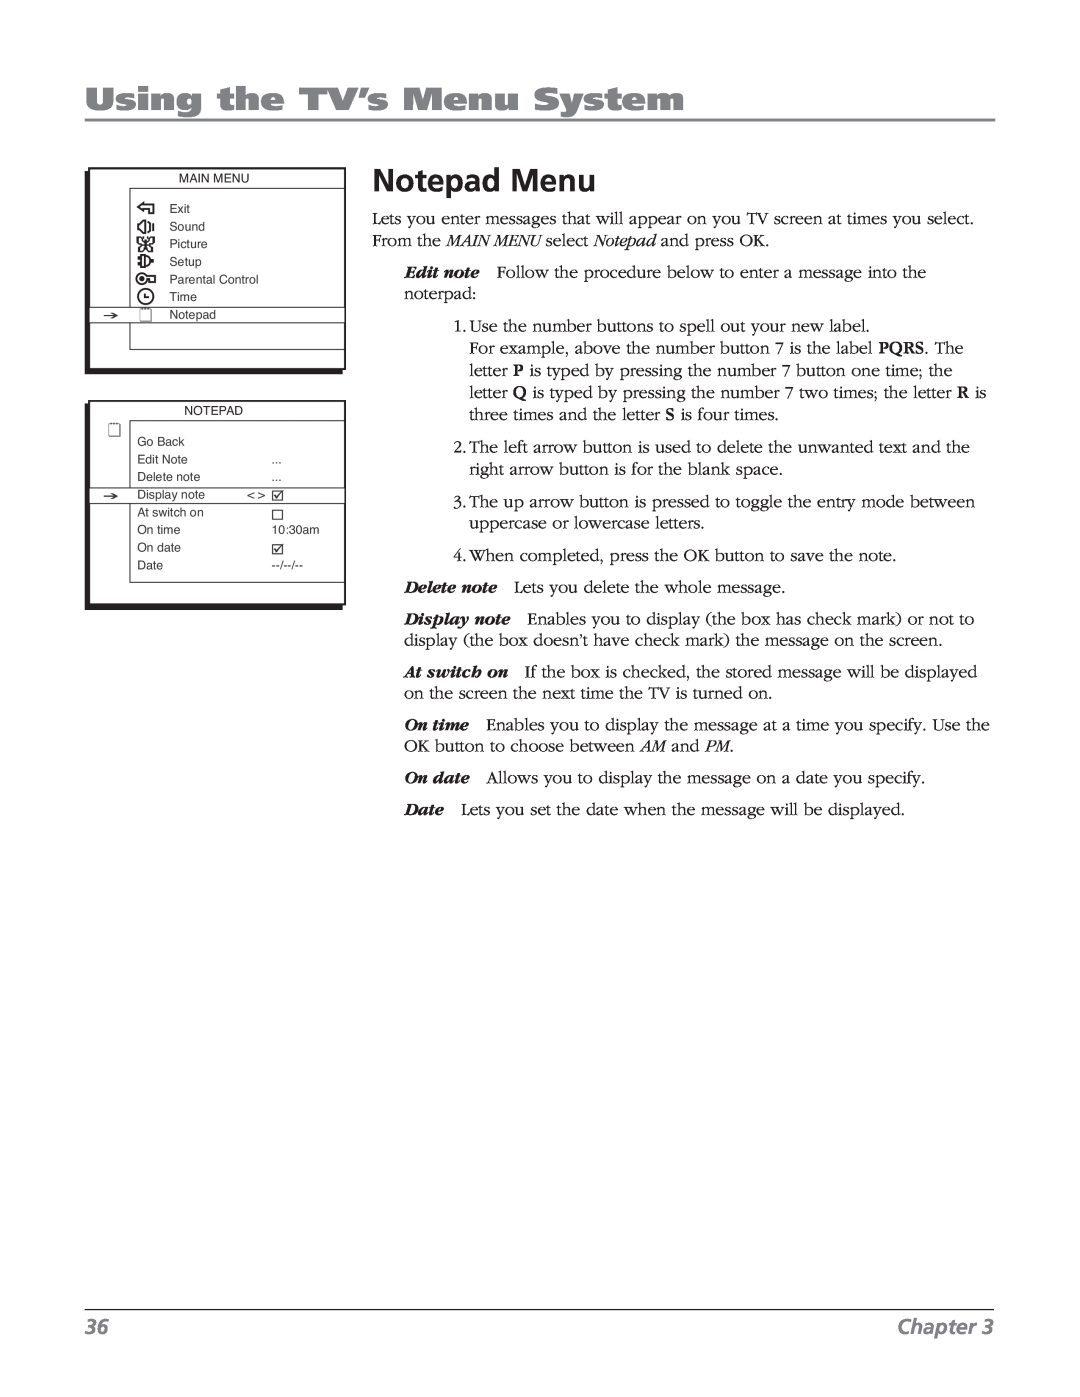 RCA 32V524T, 32v434t manual Notepad Menu, Using the TV’s Menu System, Chapter 